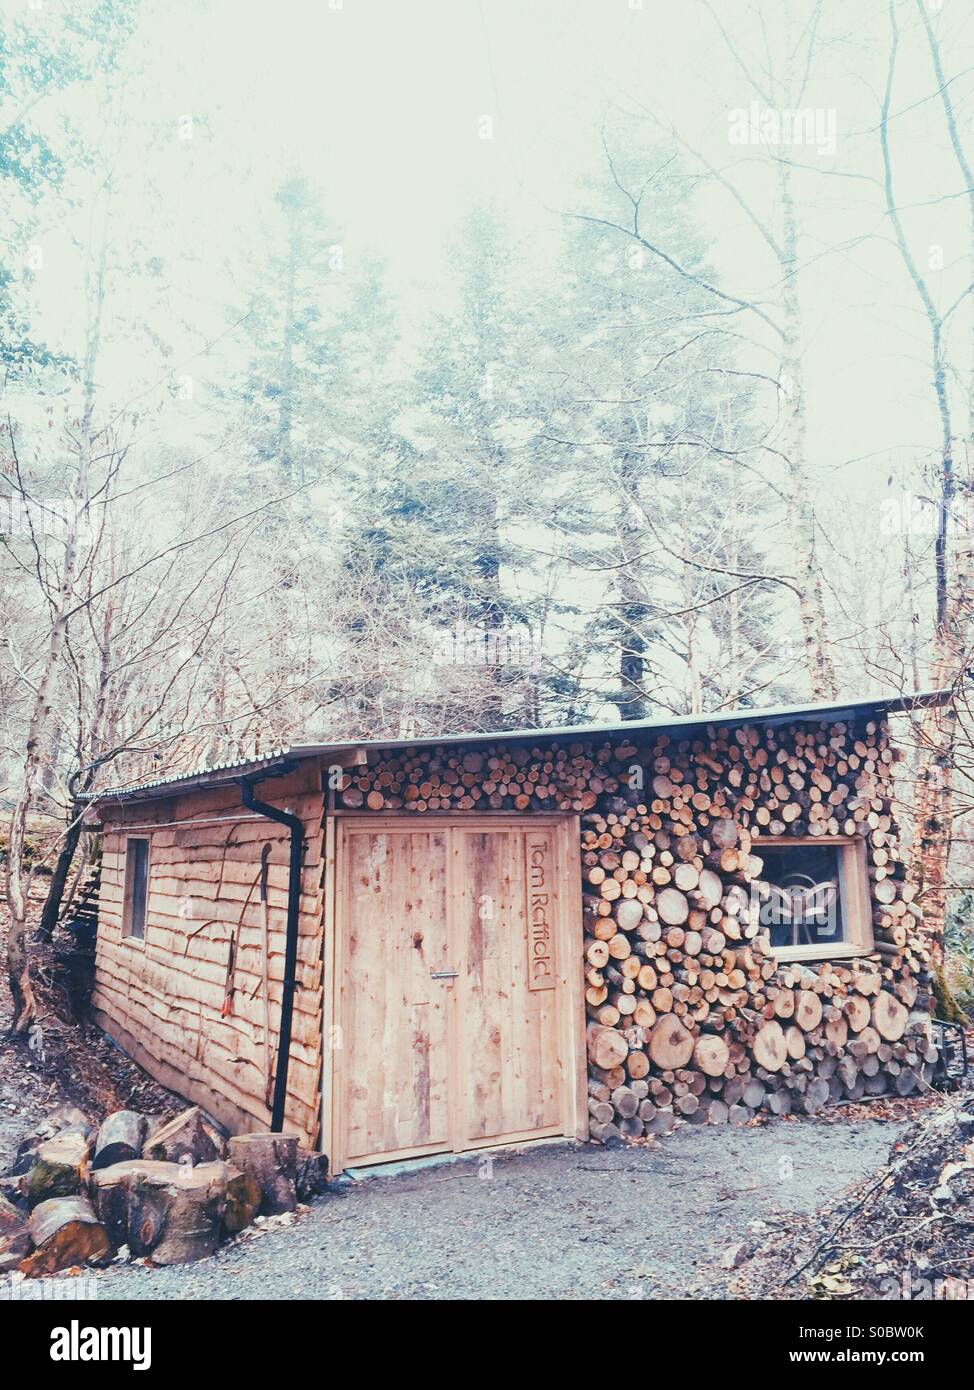 Designer & craftman, Tom Raffield's wood cabin in Cornwall. Stock Photo